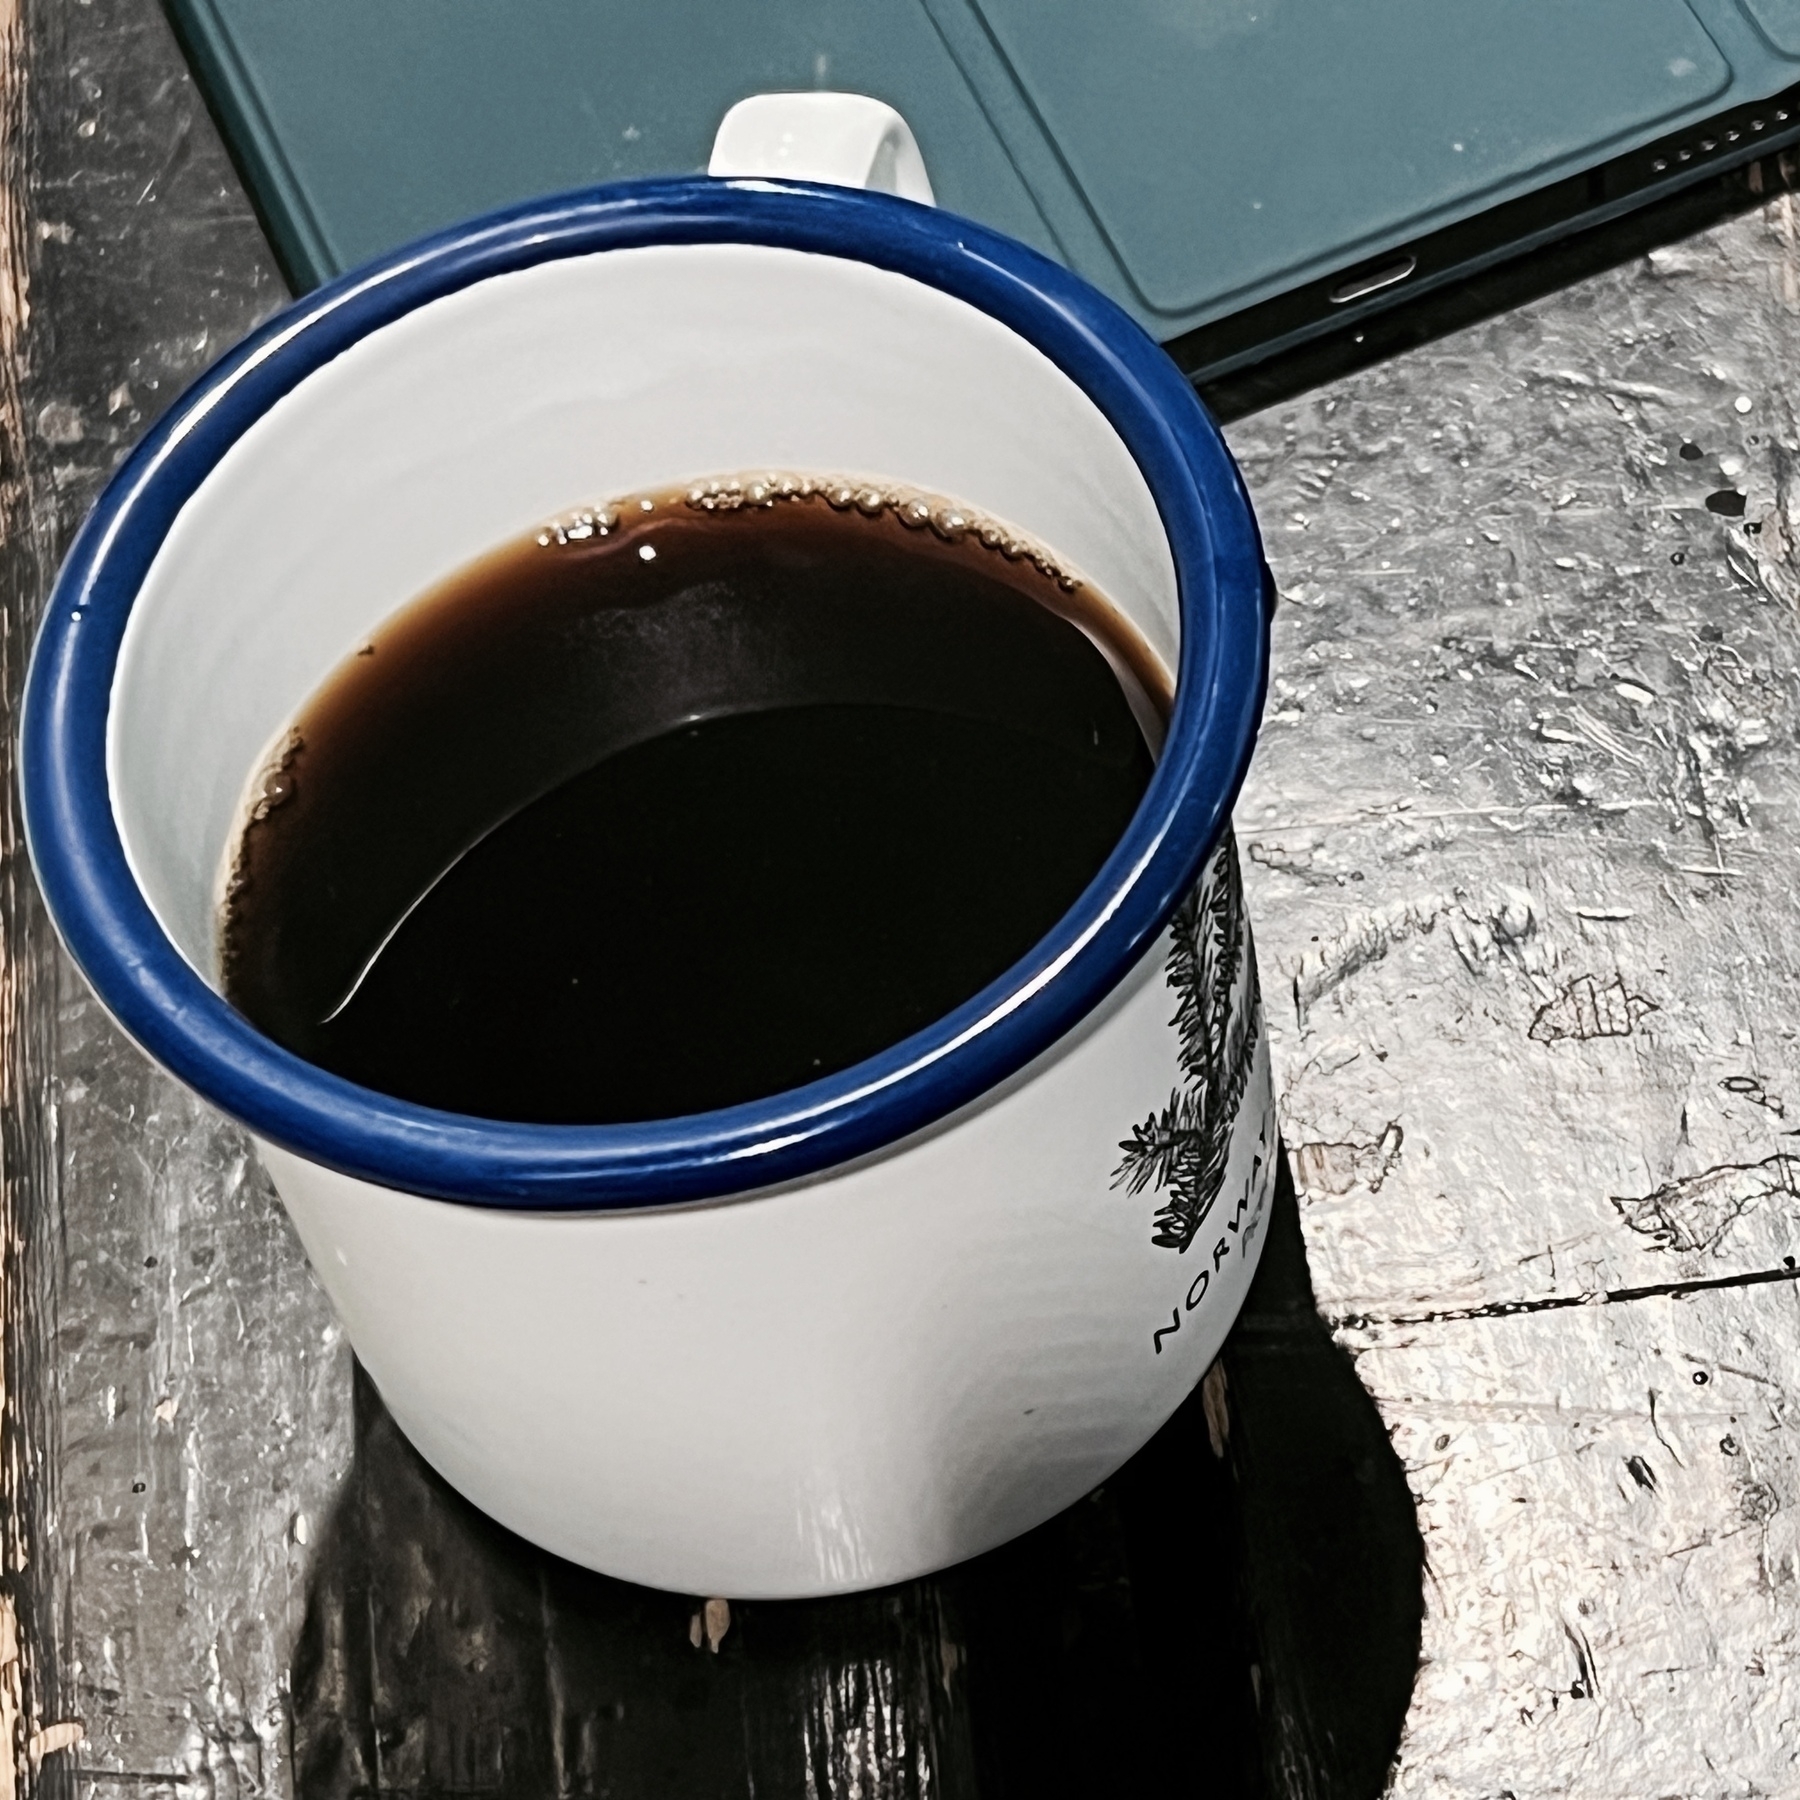 Black coffee in an Ernest Journal enamel mug.